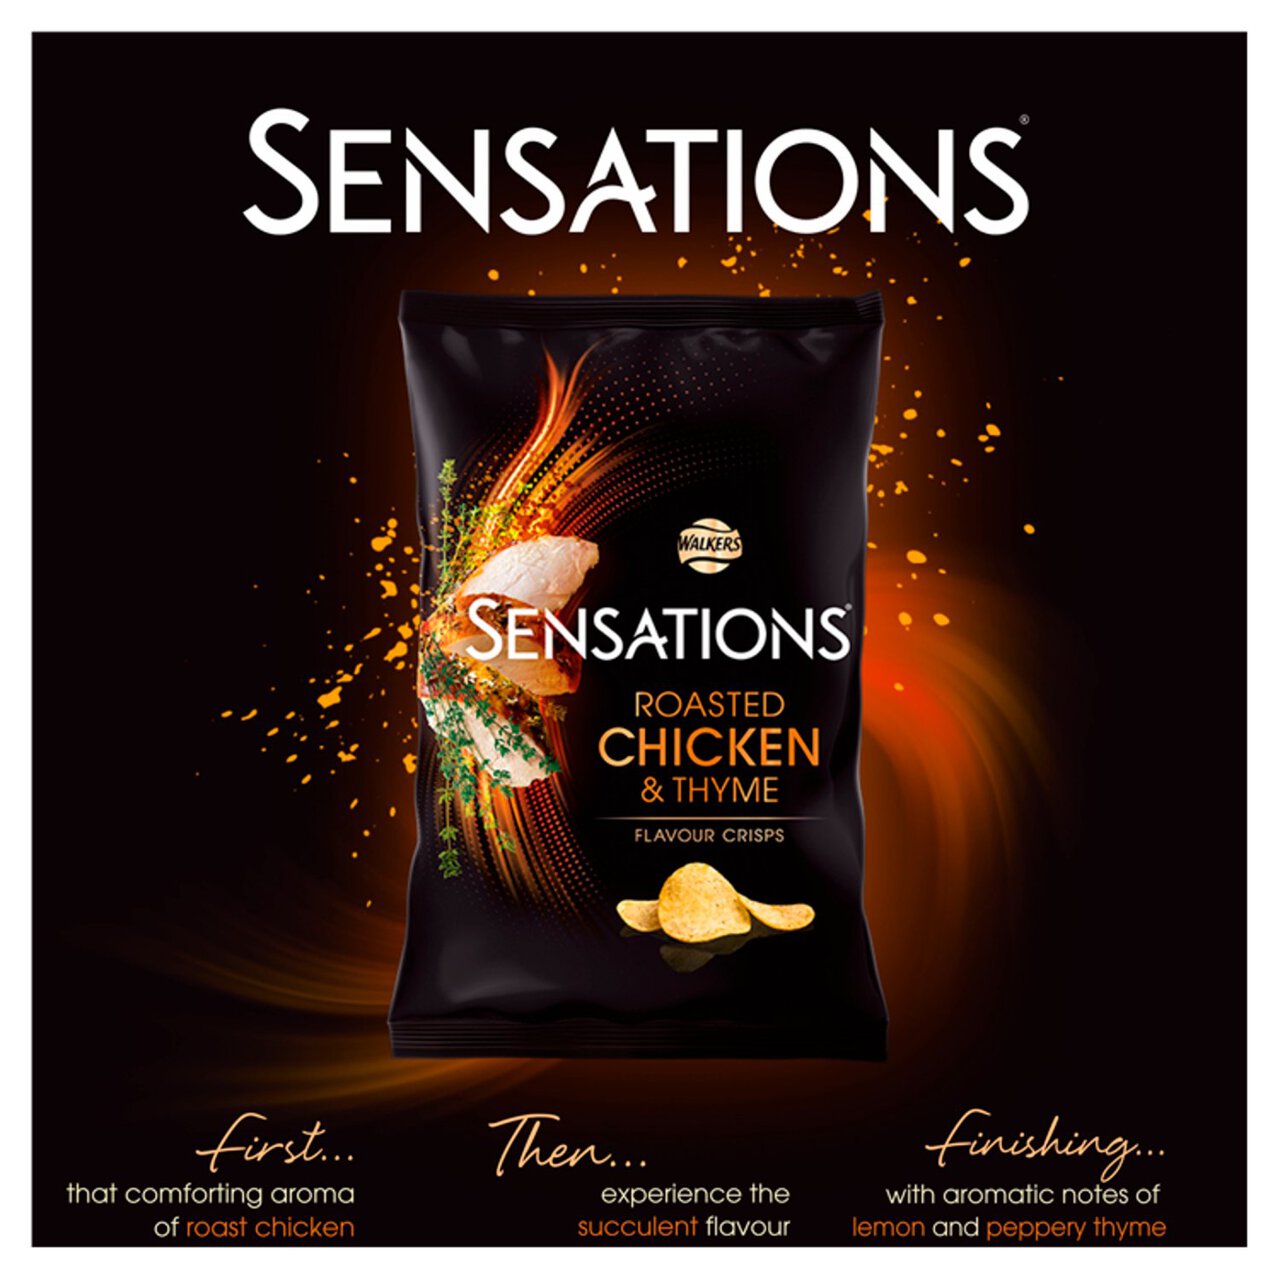 Sensations Roasted Chicken & Thyme Sharing Bag Crisps 150g